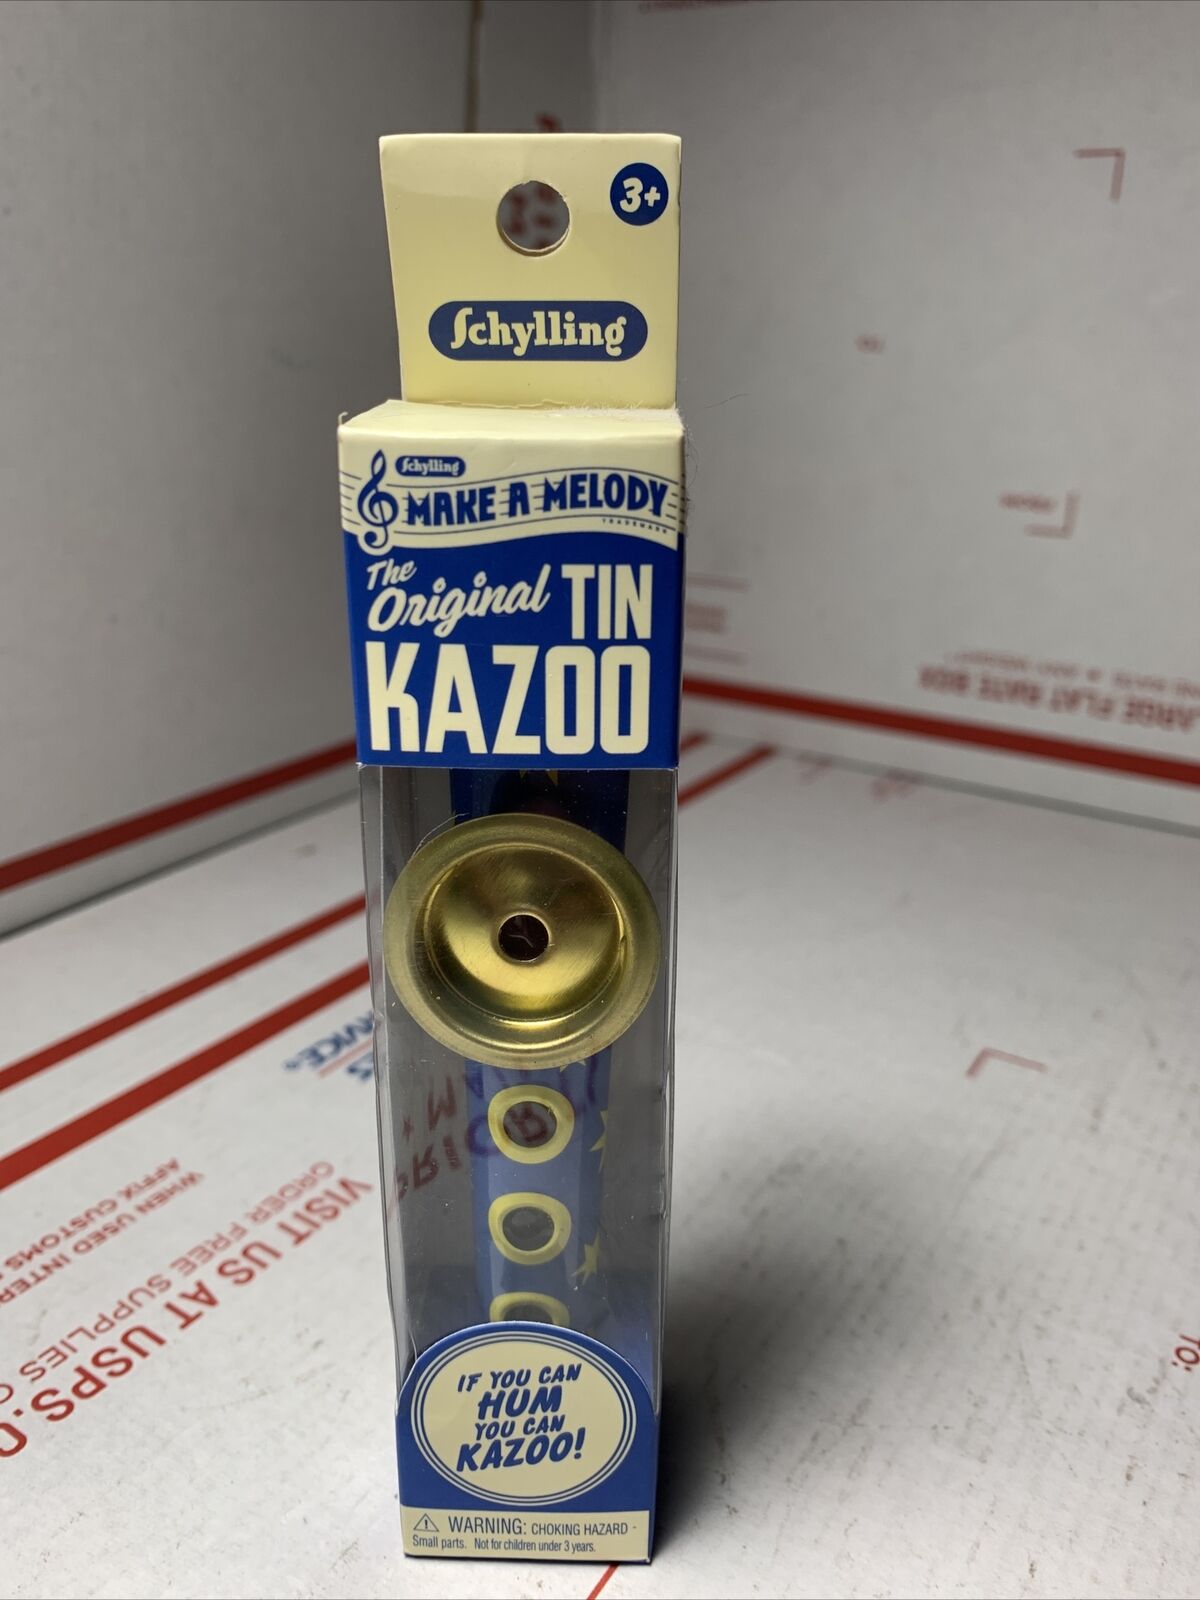 2017 BLUE SCHYLLING THE ORIGINAL TIN KAZOO IN BOX - Good Shape